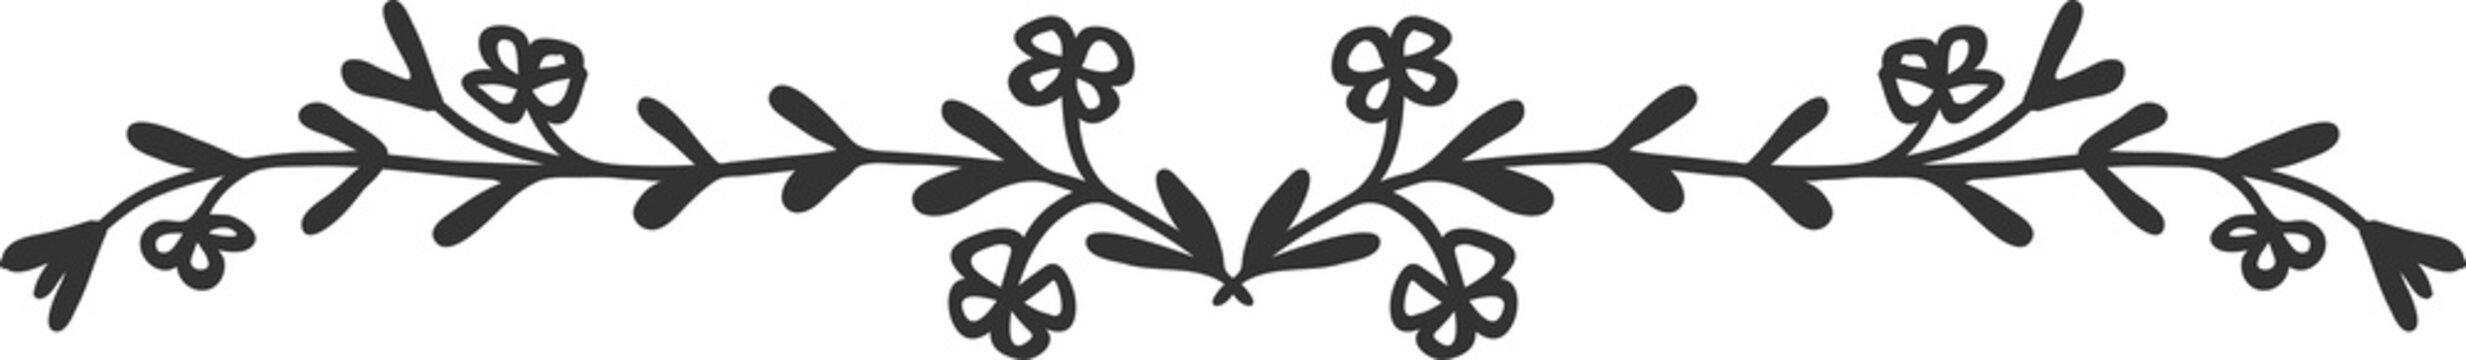 Border, flourish vintage scroll or floral filigree